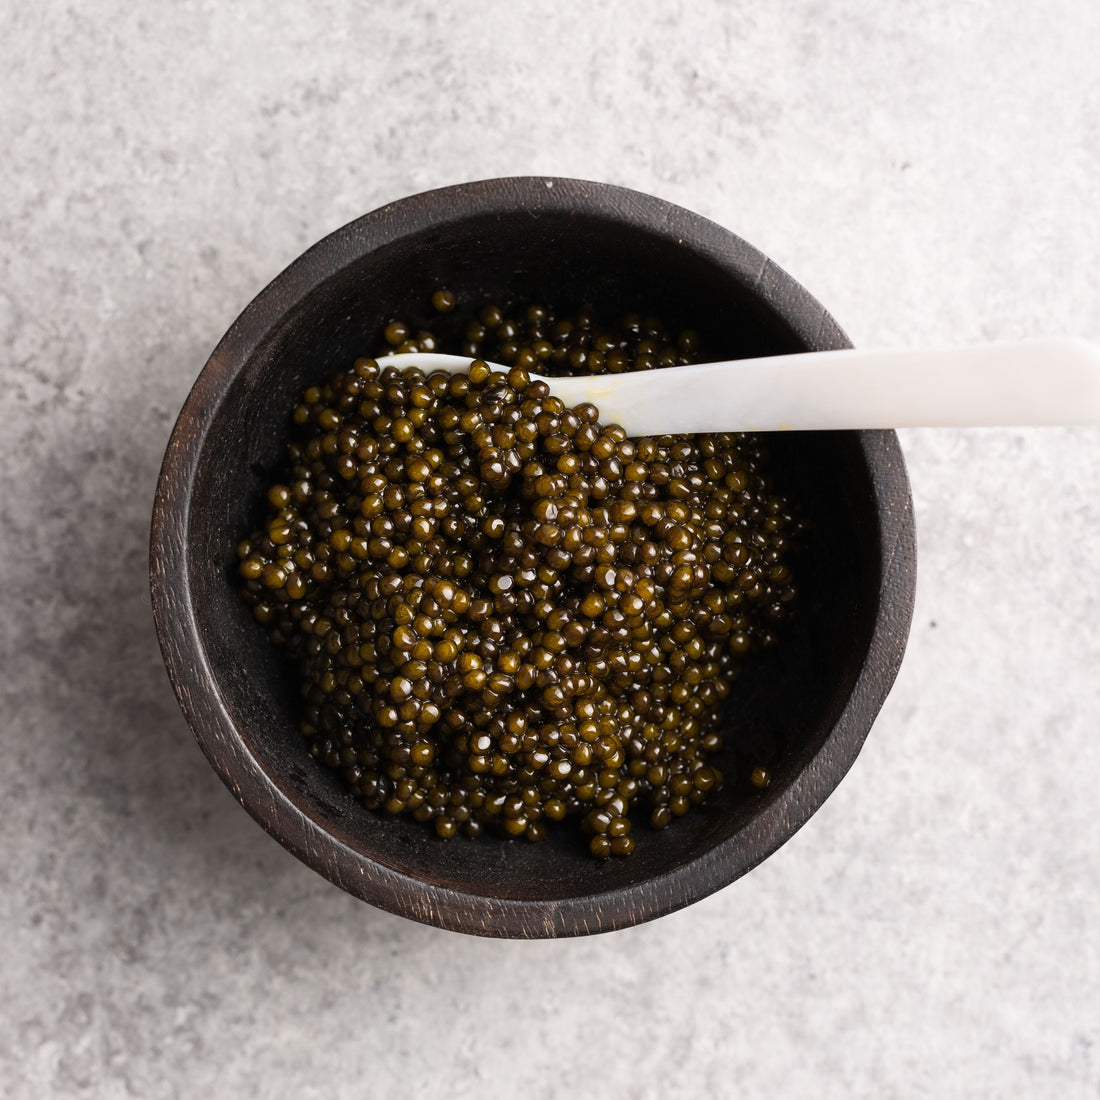 Recipes with Caviar: Indulgent Caviar Recipes